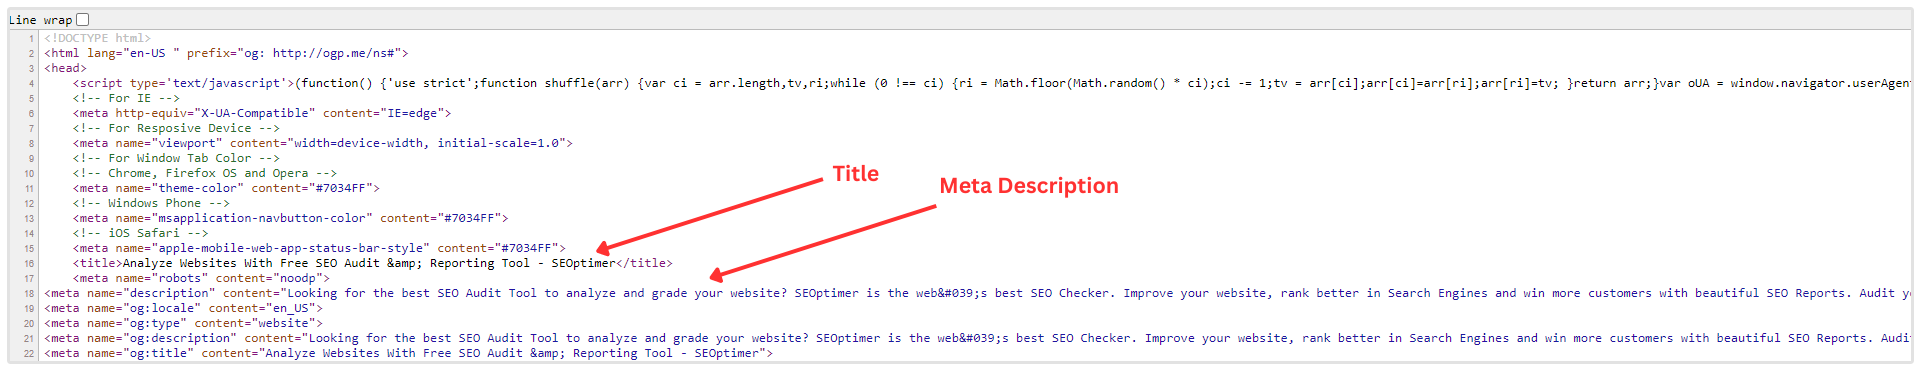 Meta Description and Title Source Code